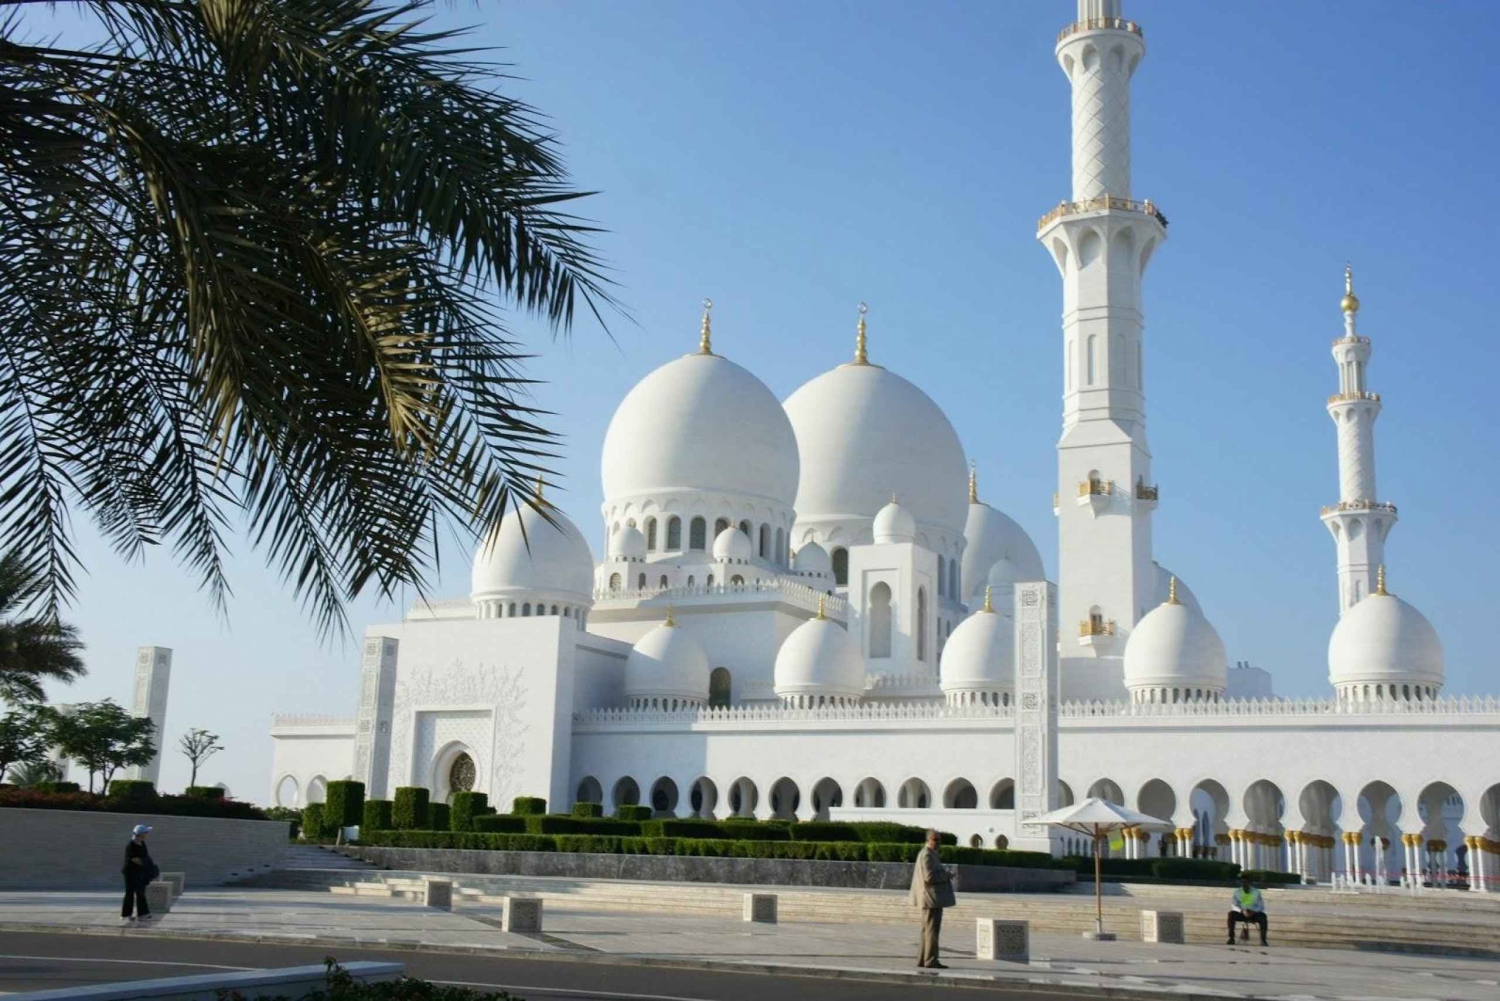 Dubai: Mezquita del Jeque Zayed, Abu Dhabi City Sightseeing Tour